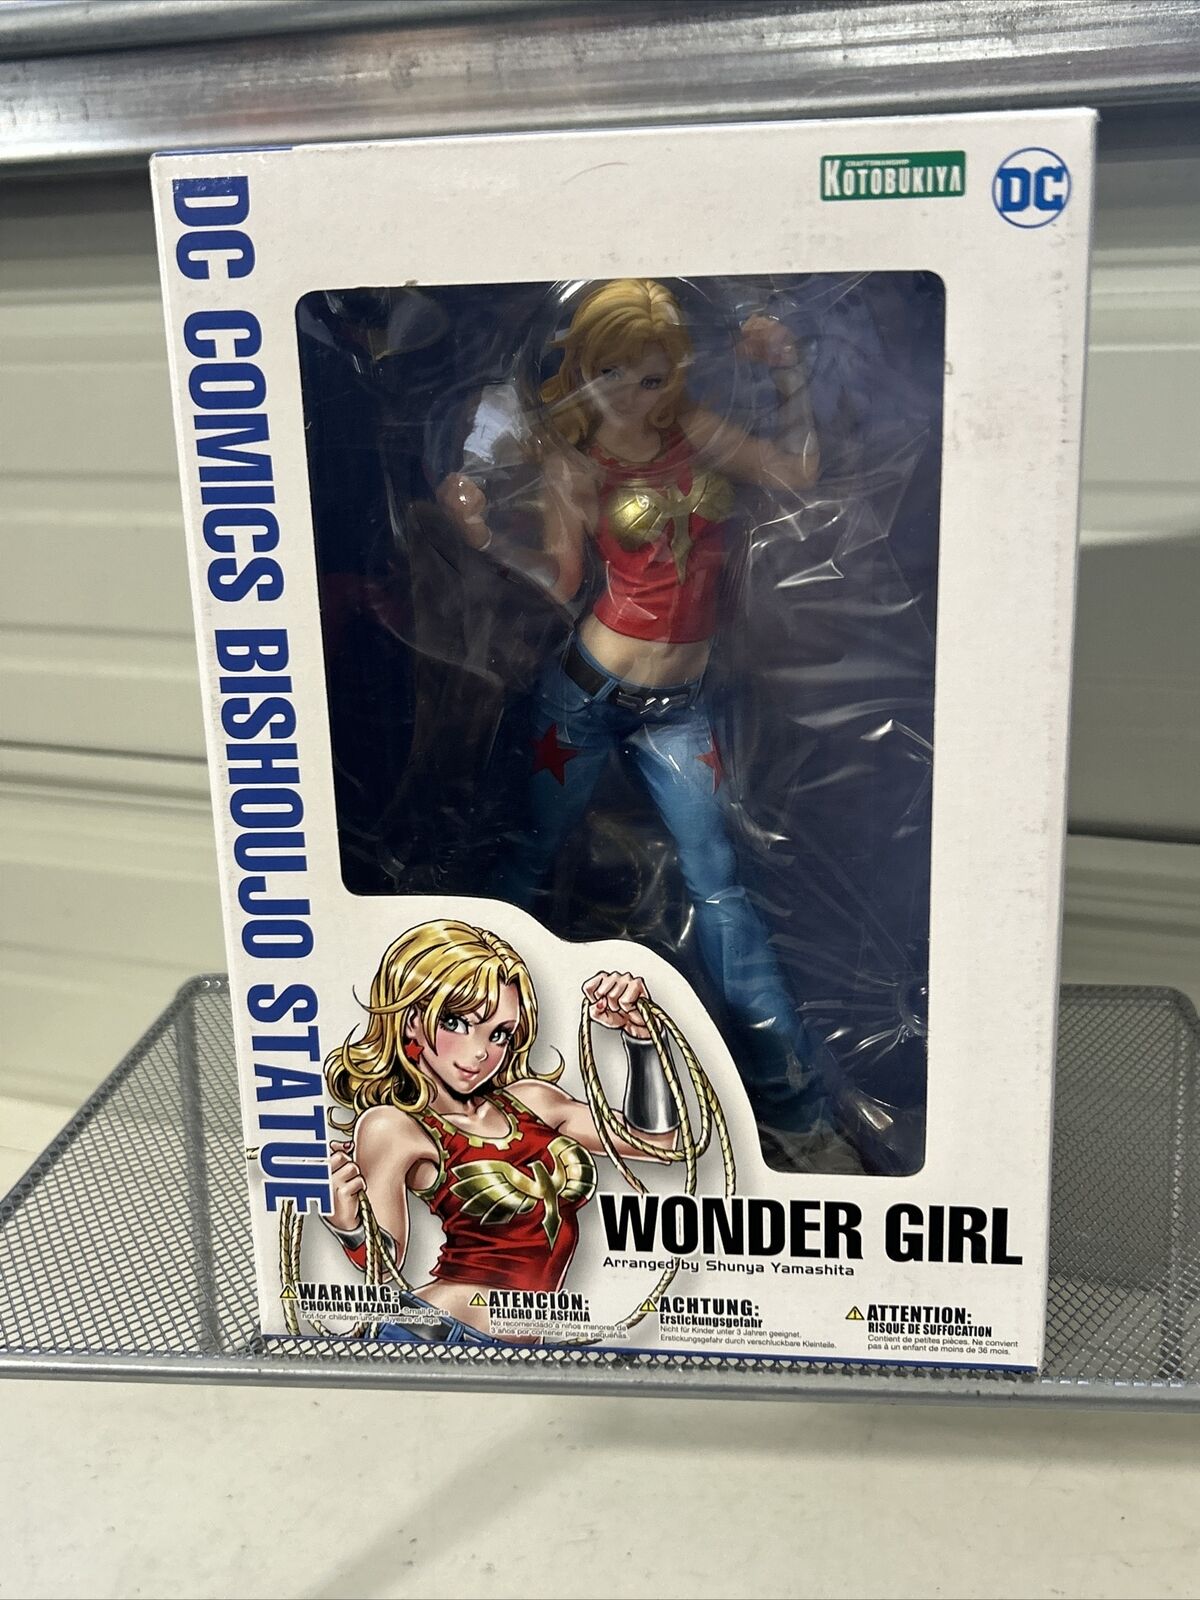 KOTOBUKIYA DC Comics Wonder Girl Bishoujo Statue 1:7 Scale FIGURE NEW